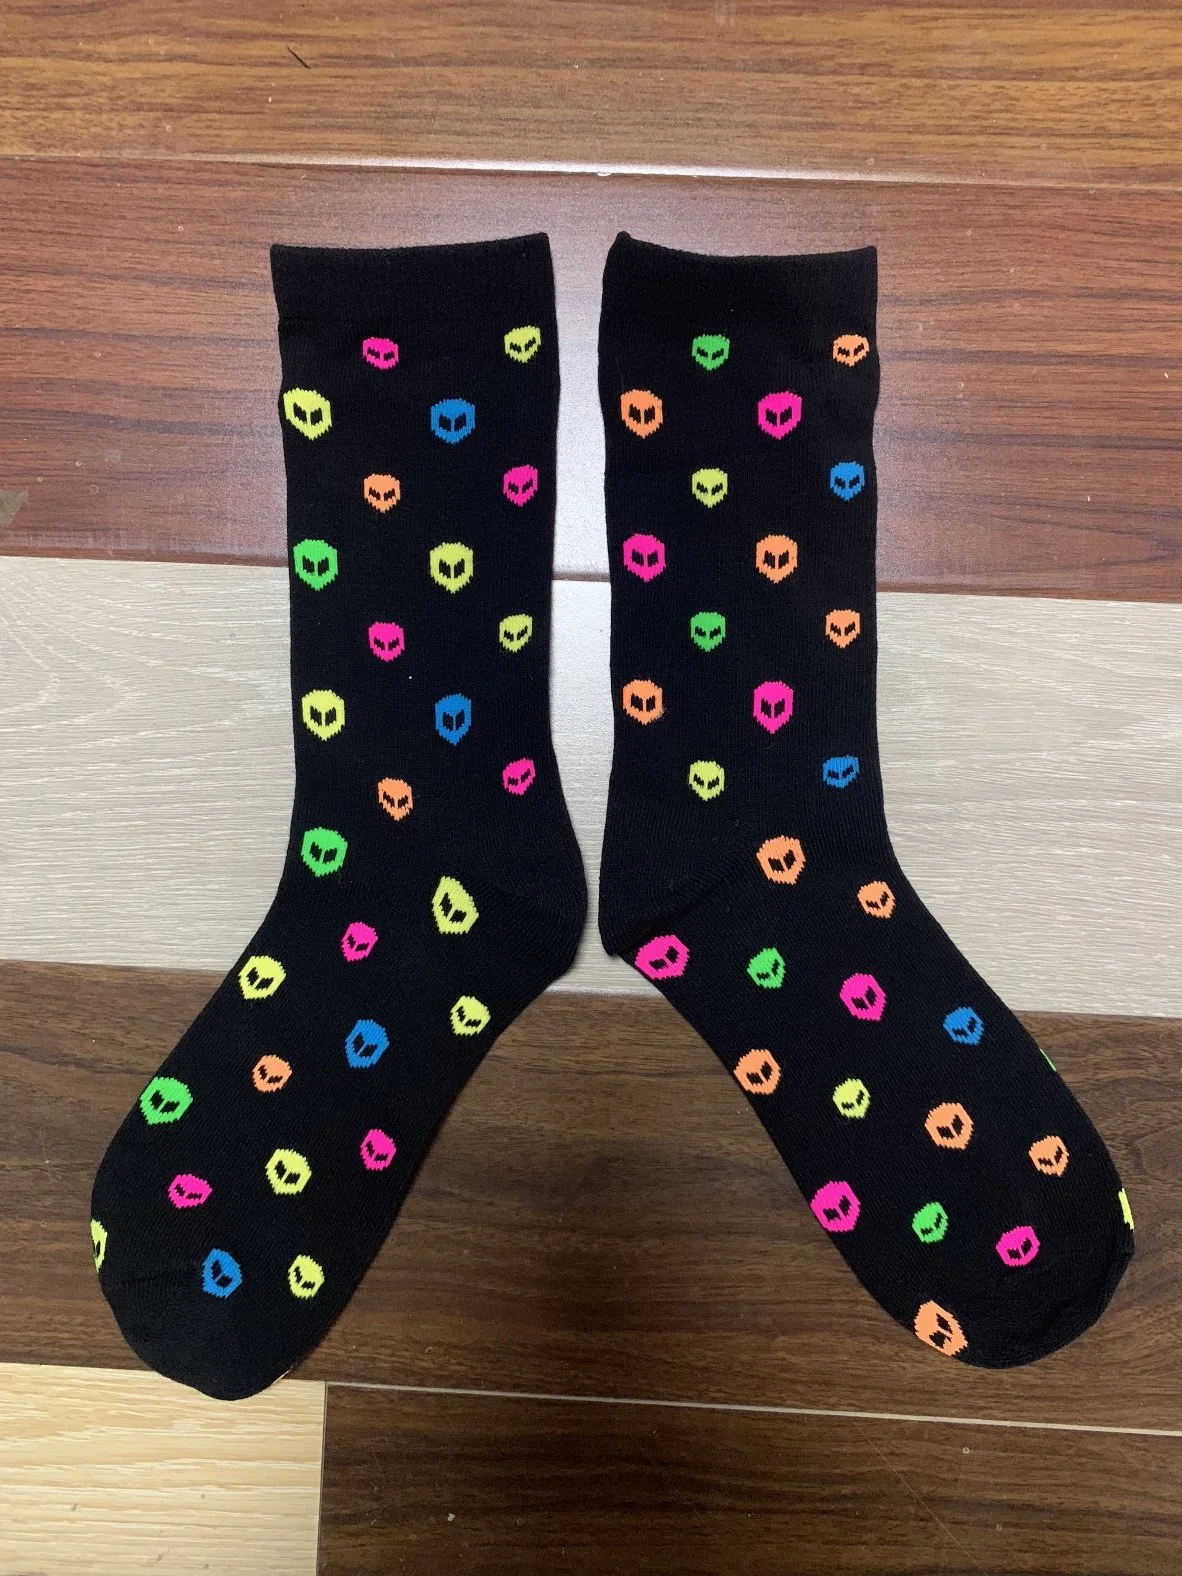 New Arrival Cotton Socks Hosiery Colorful Socks Medical Traveling